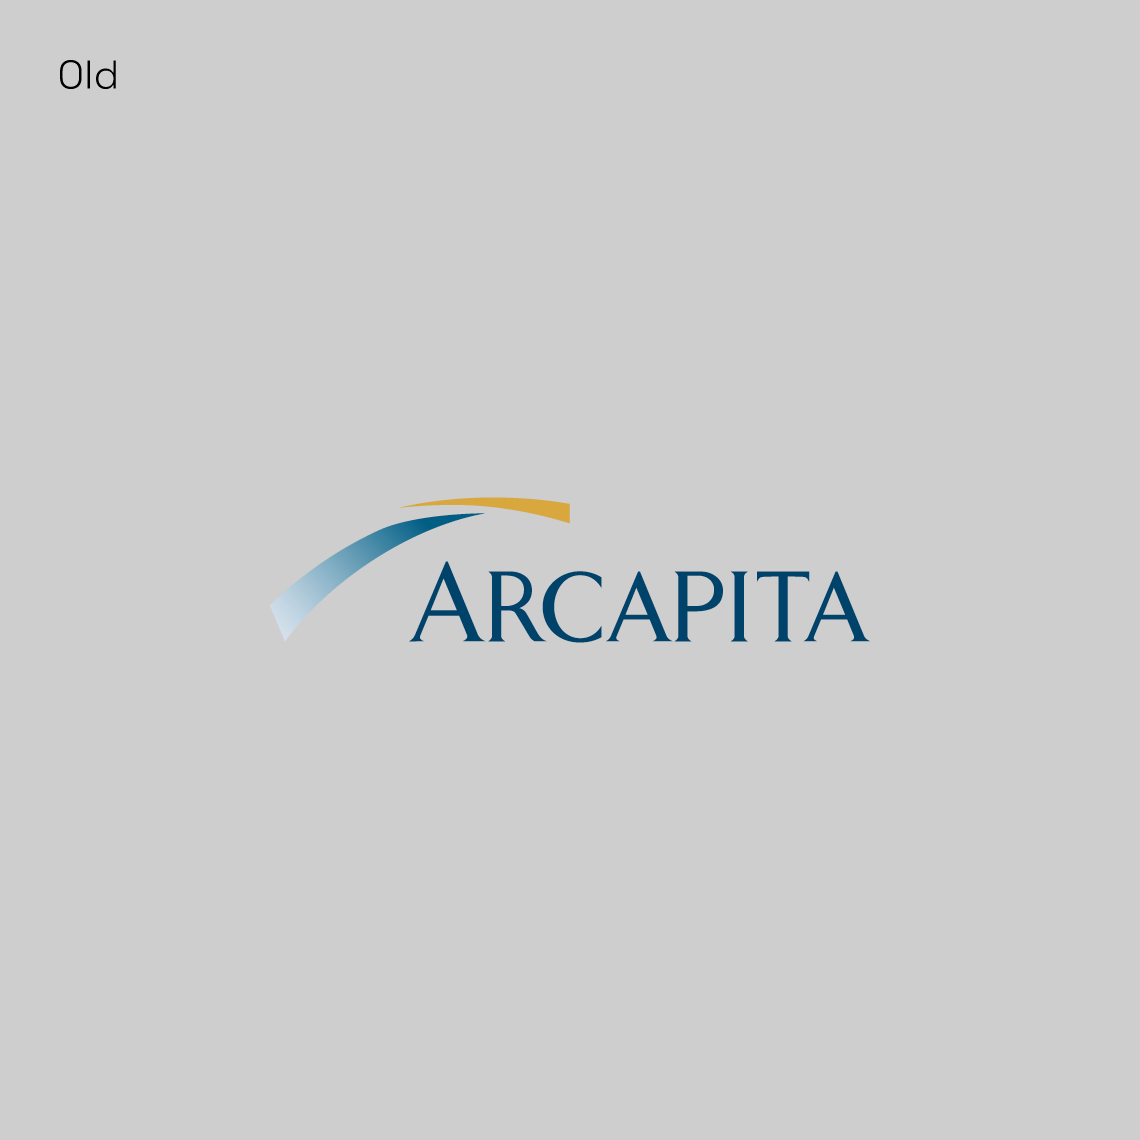 Old Arcapita brand identity